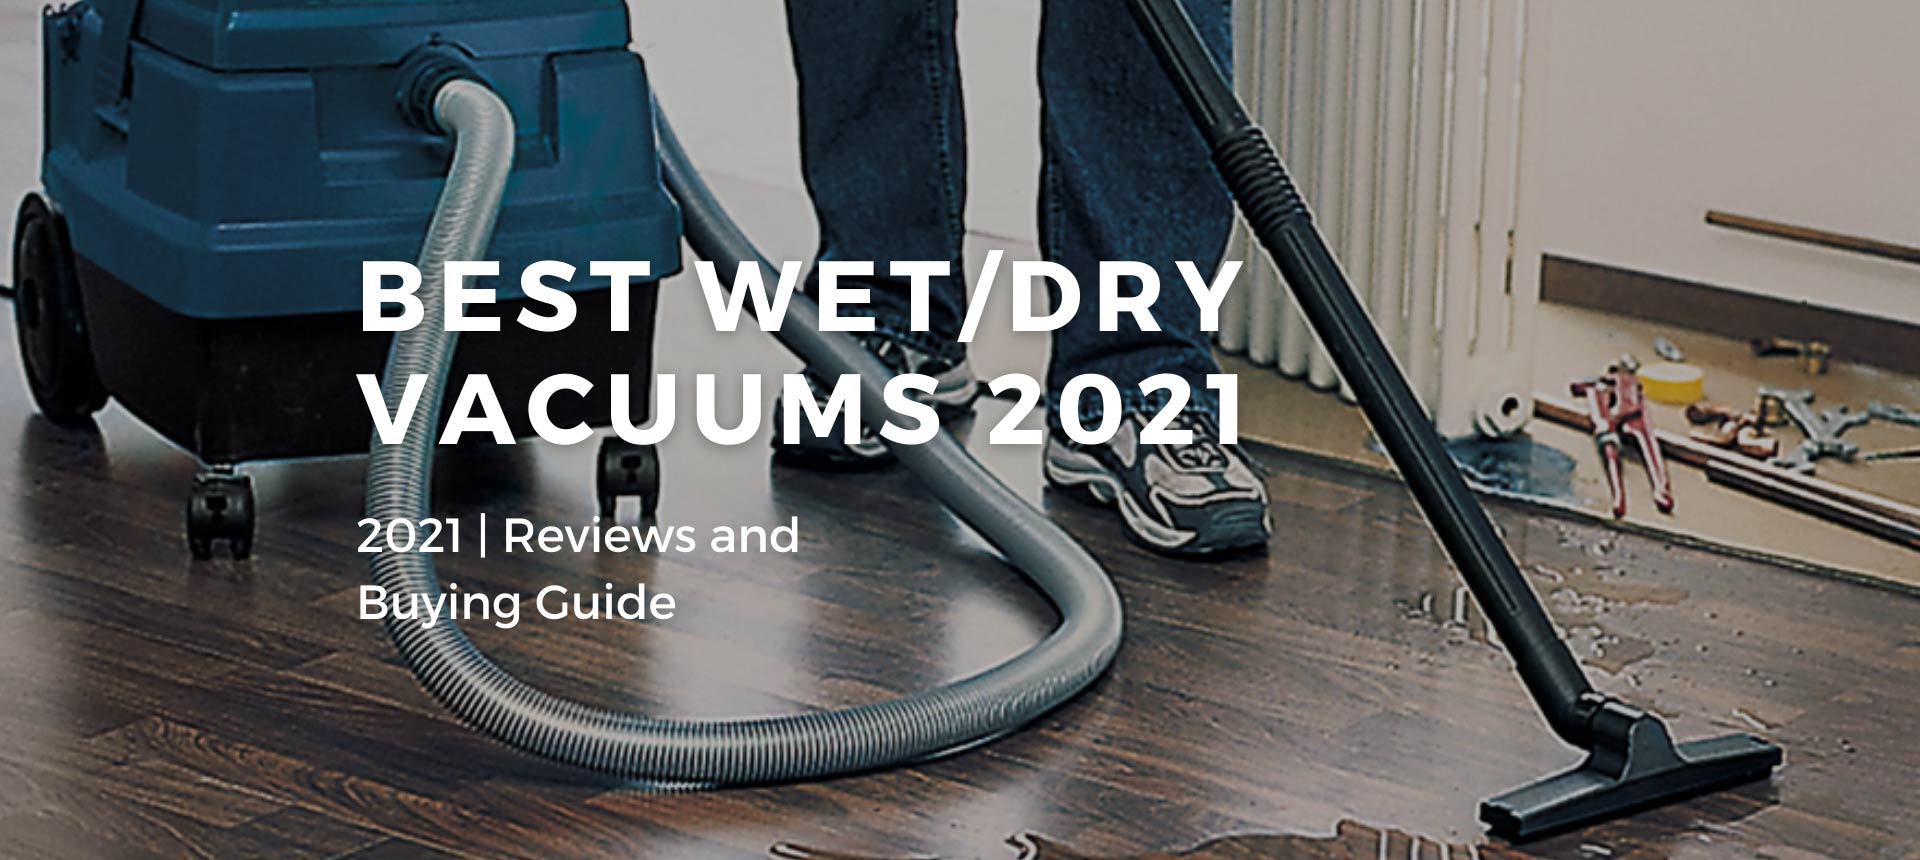 Best Wet/Dry Vacuums 2021